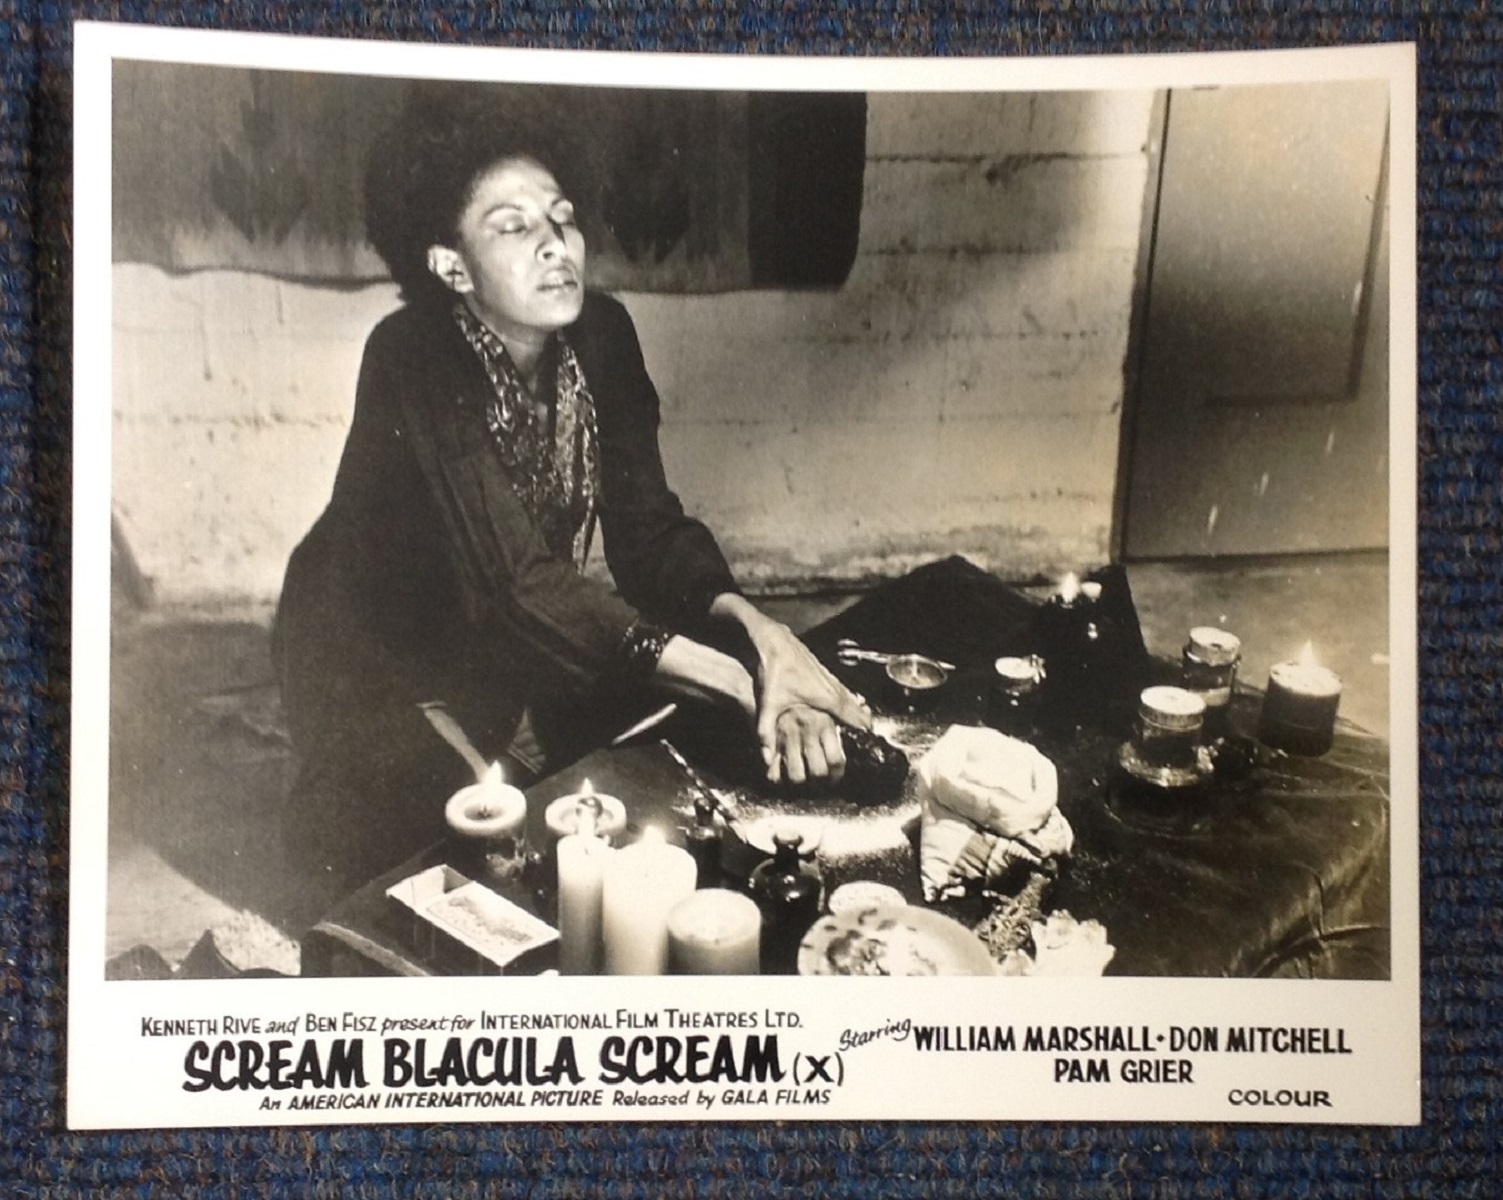 Scream Blacula Scream vintage black and white lobby card from the 1973 American blaxploitation